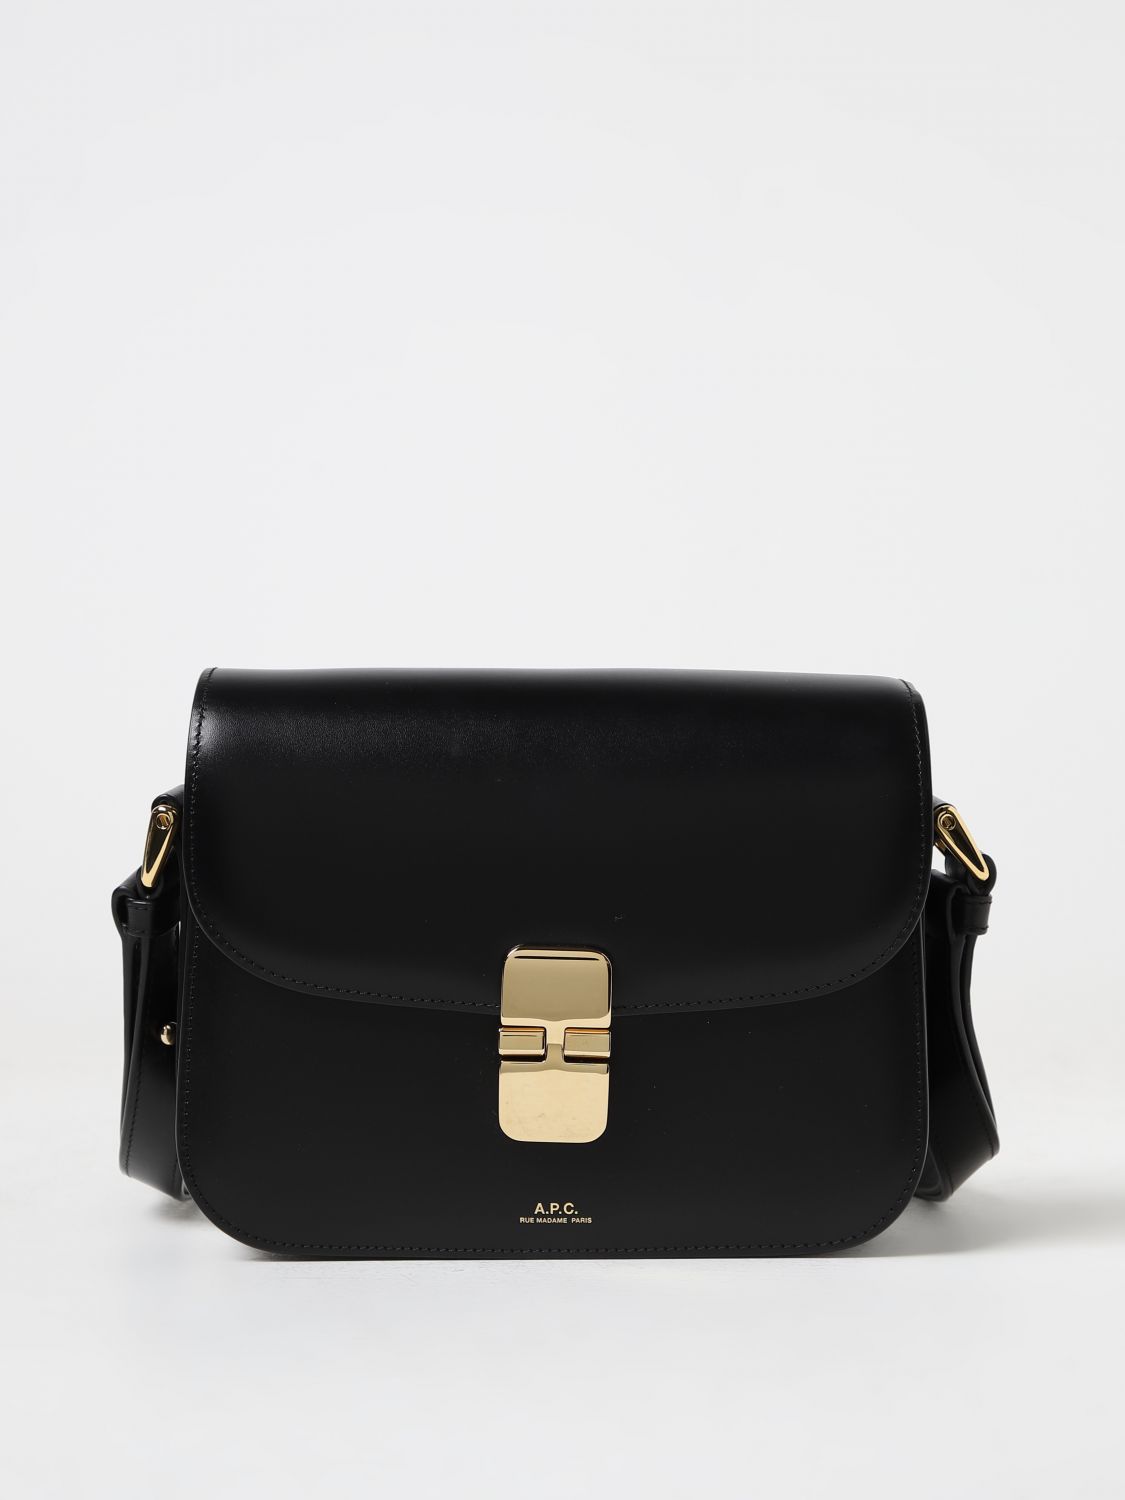 Apc A.p.c. Grace Leather Bag In Black